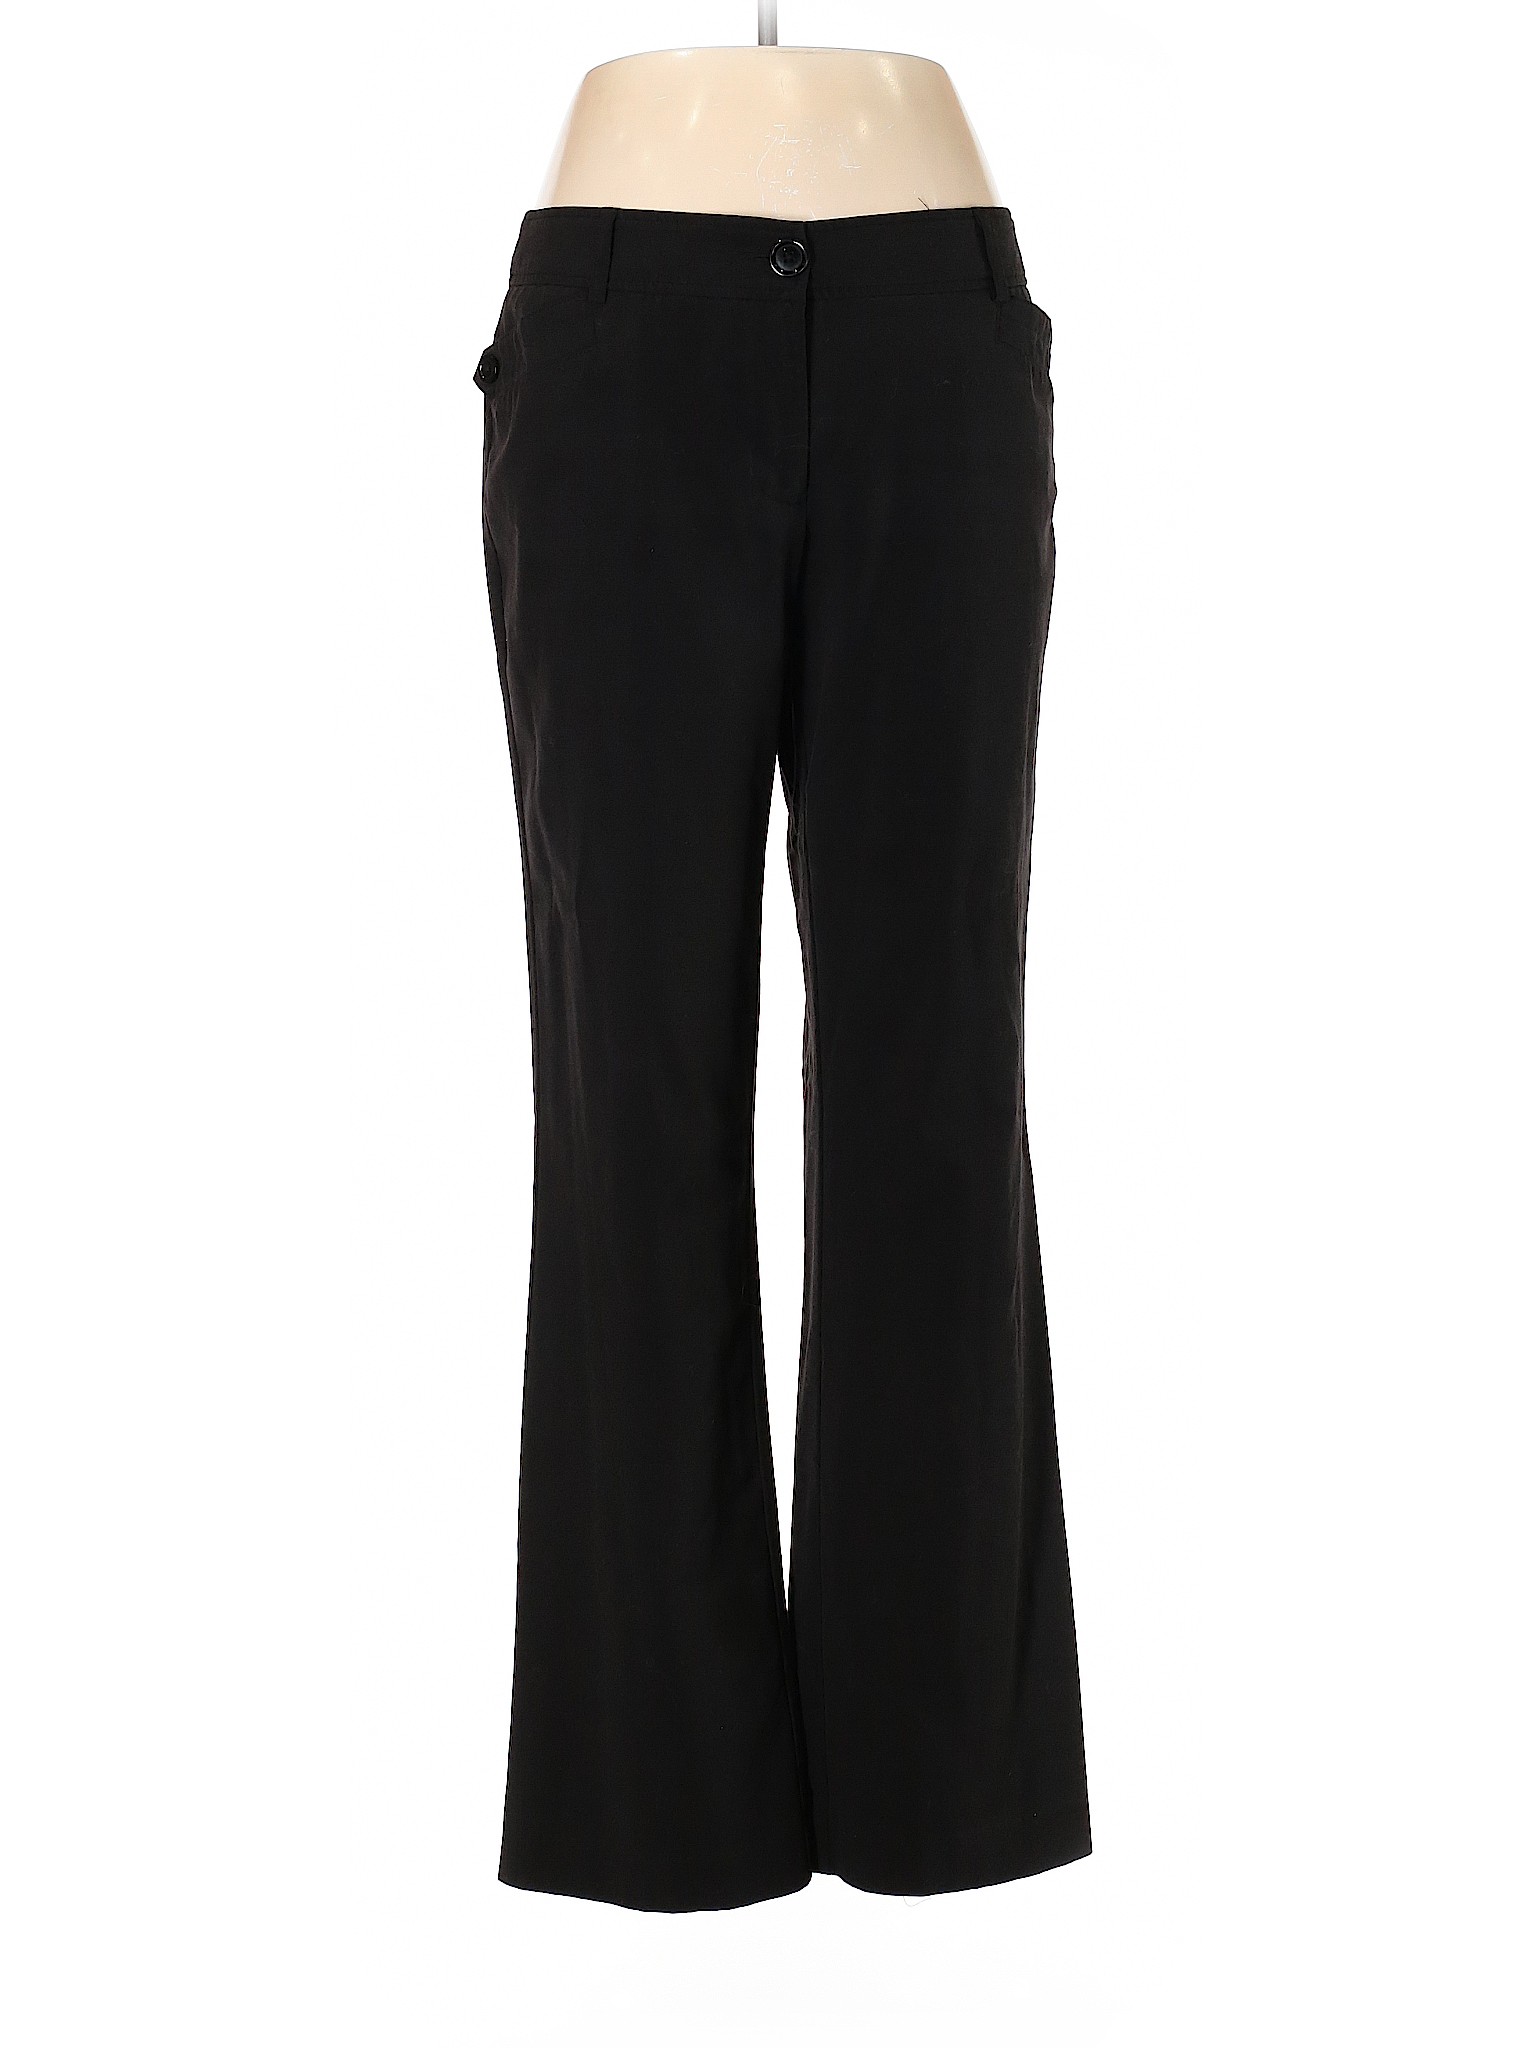 Counterparts Women Black Dress Pants 10 | eBay